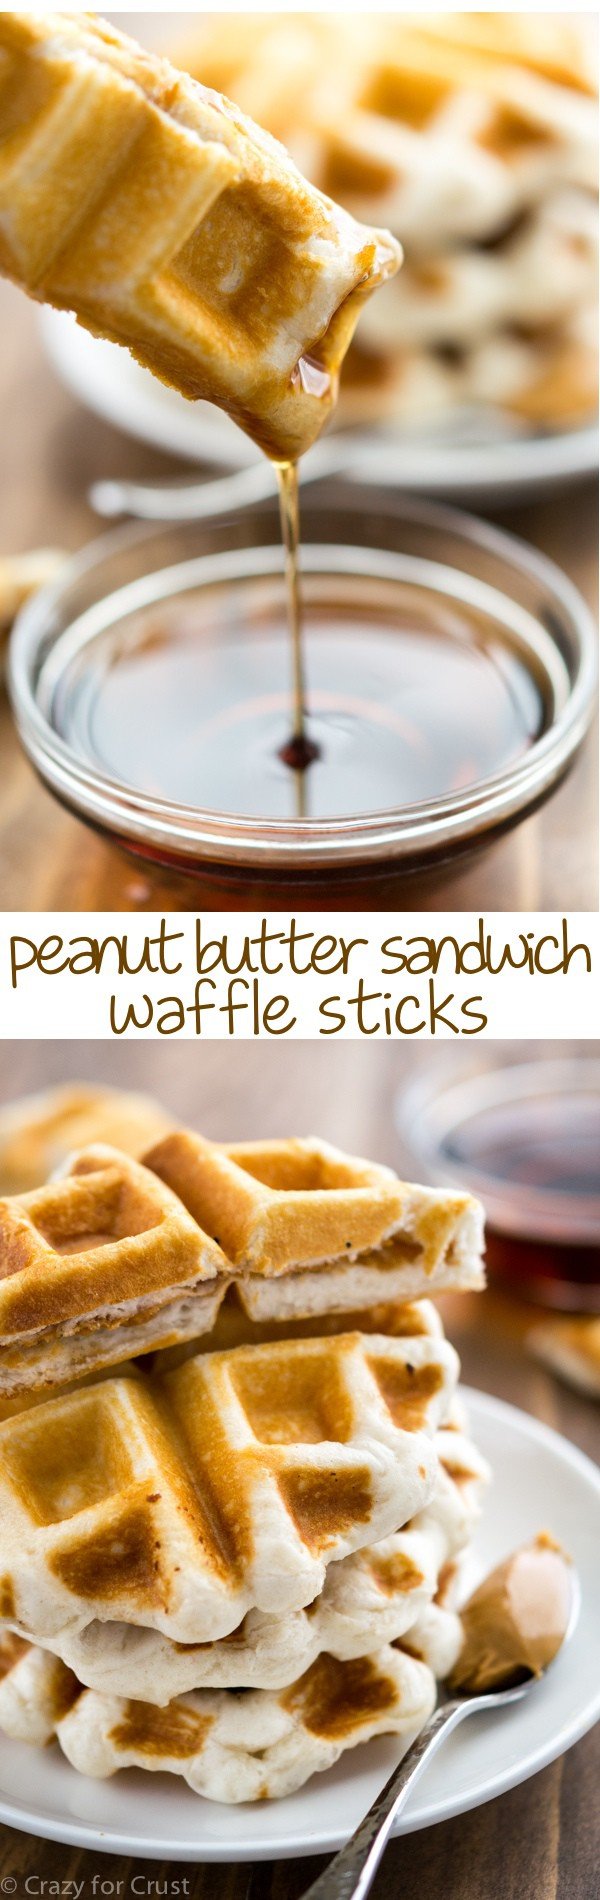 peanut butter sandwich waffles collage photos